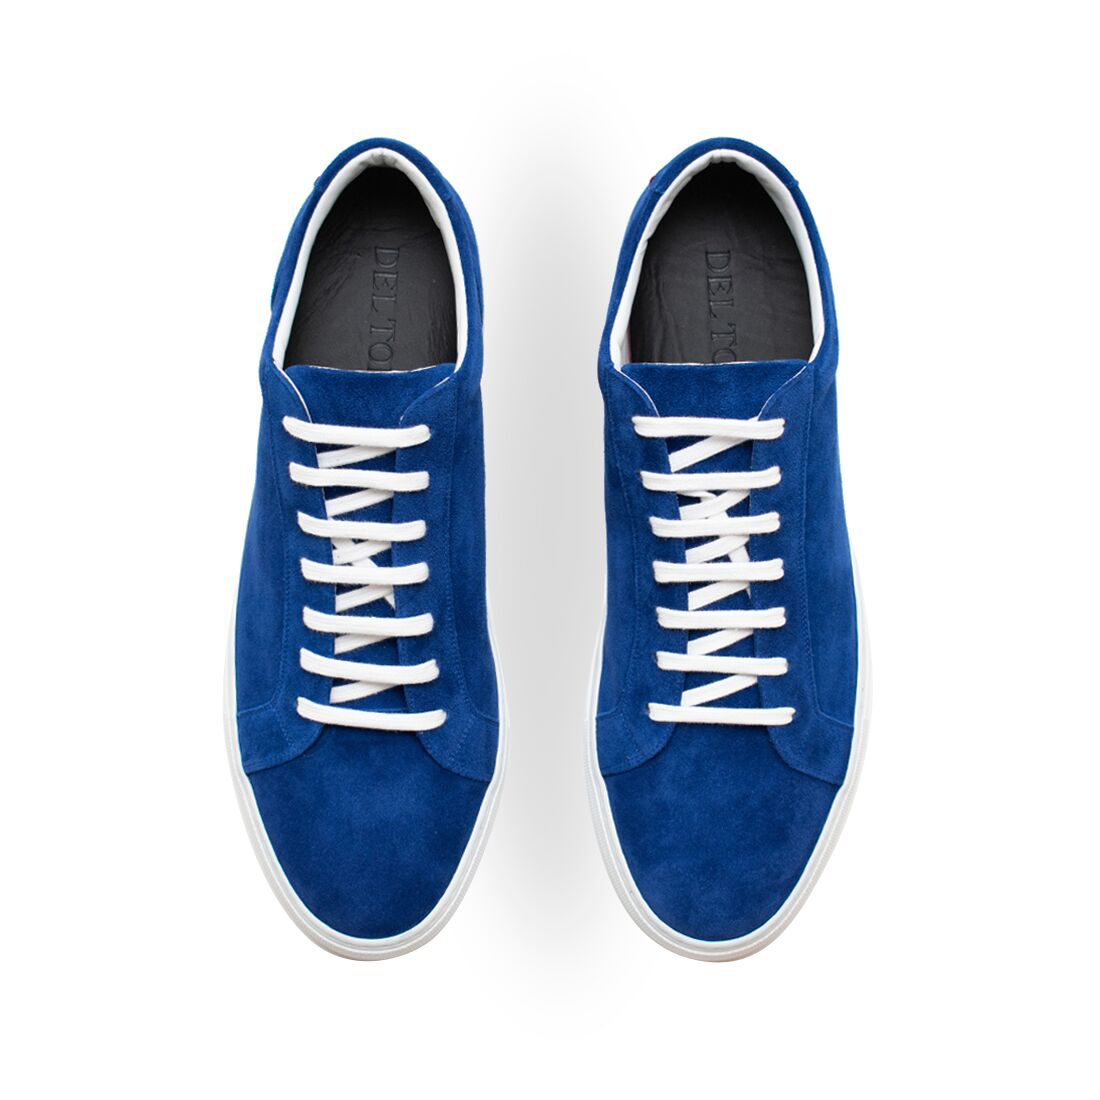 Men's Royal Blue Suede Sardegna Sneaker II by Del Toro Shoes